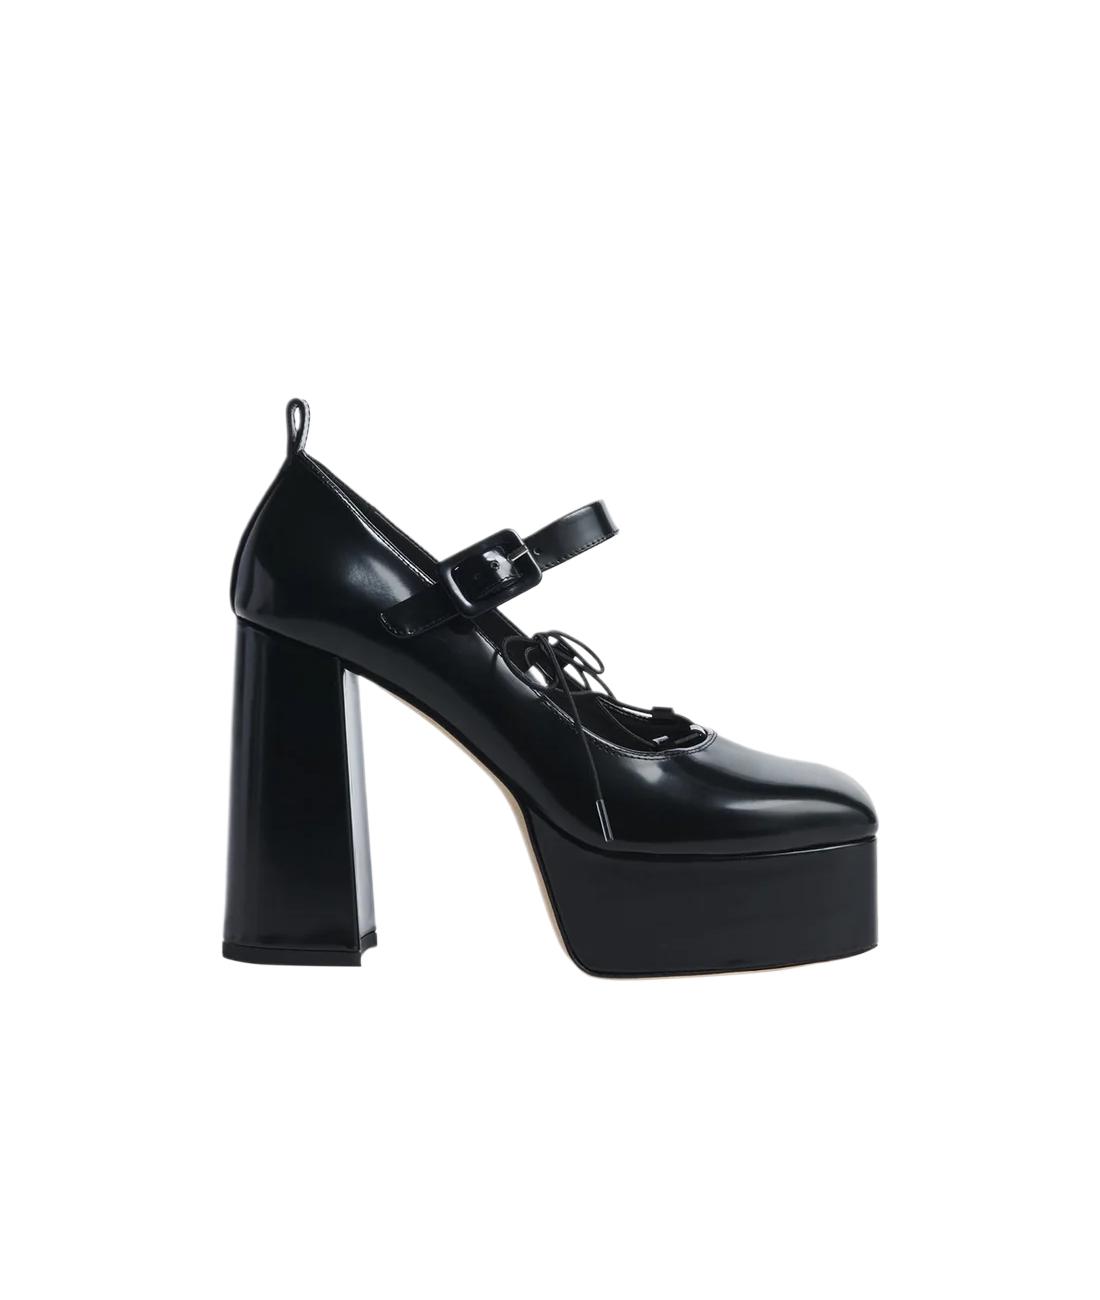 Heart toe leather platform pump heels